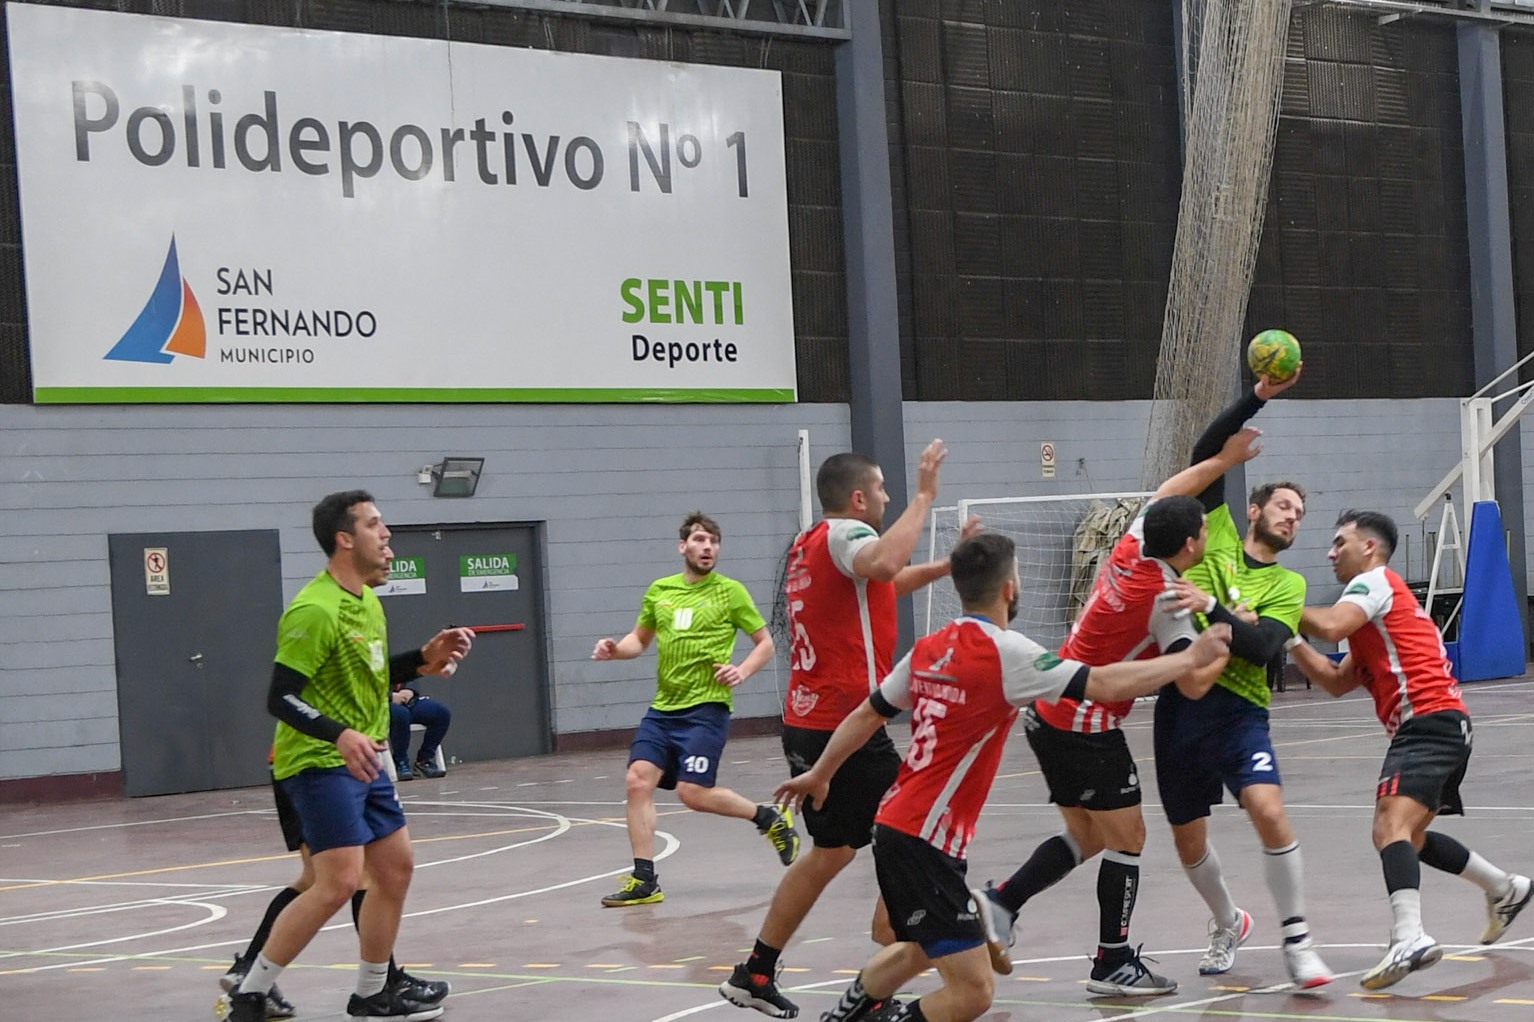 “San Fernando Handball” volvió a competir en el Polideportivo Municipal N°1 